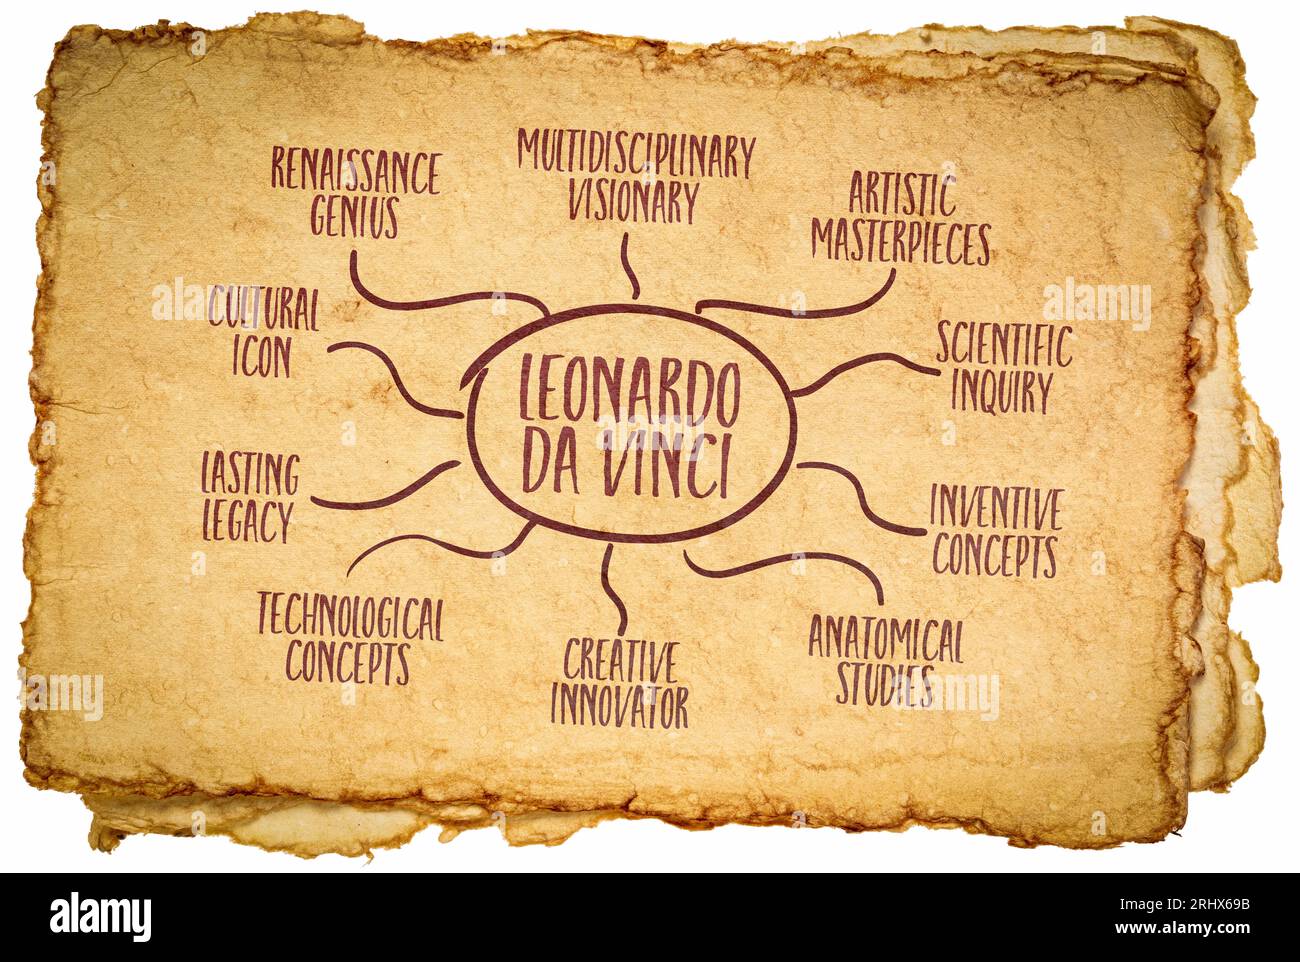 Leonardo da Vinci - infographics or mind map sketch on retro art paper, renaissance genius, visionary and artist Stock Photo